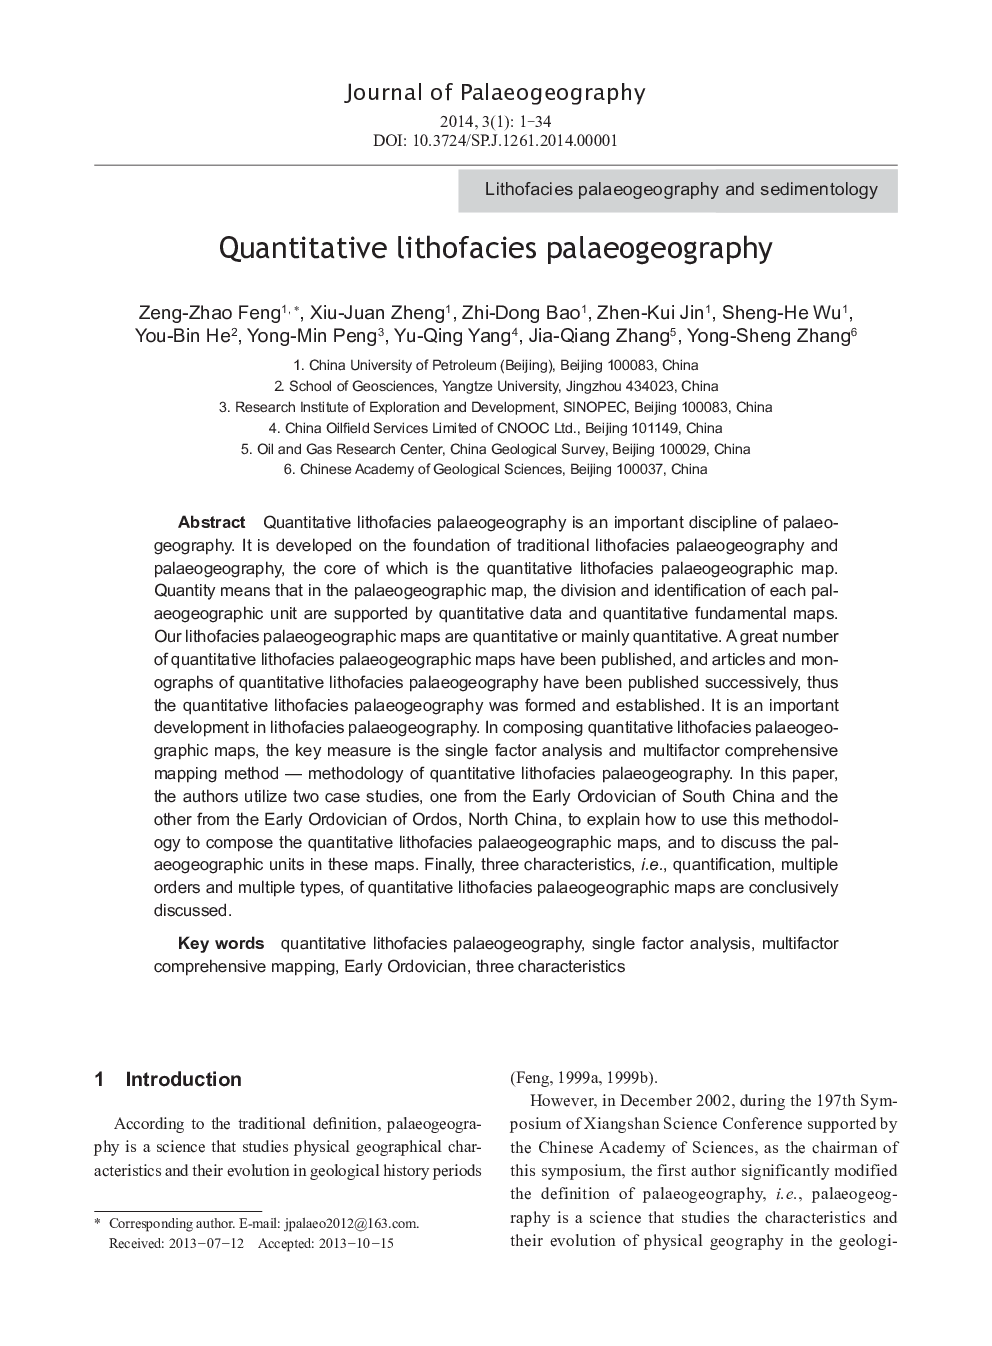 Quantitative lithofacies palaeogeography